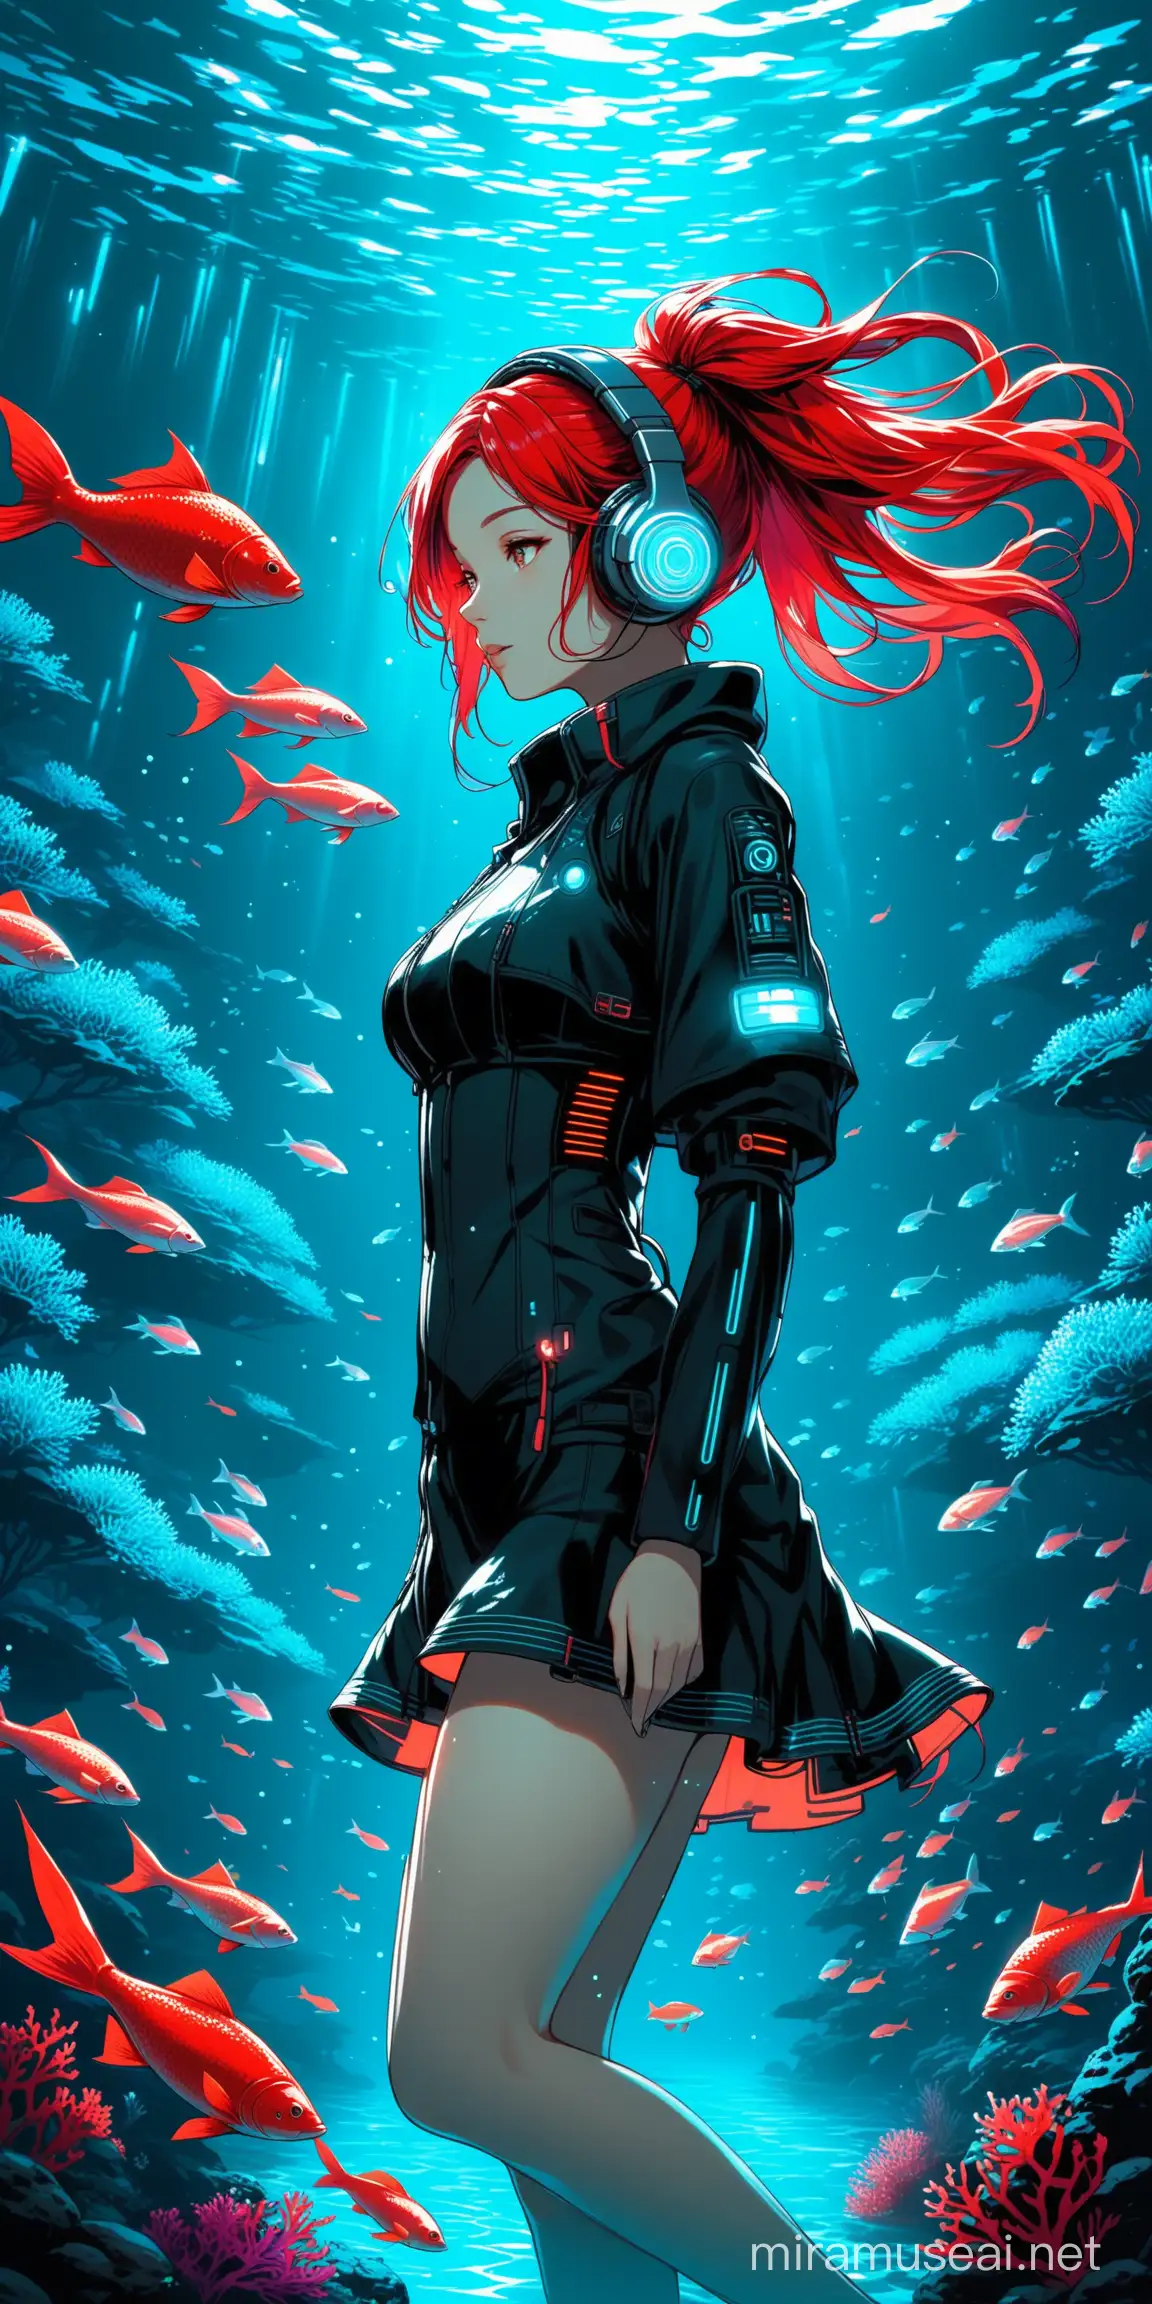 hot cyberpunk girl listening to music in an underwater bioluminescent garden with red fish swimming around